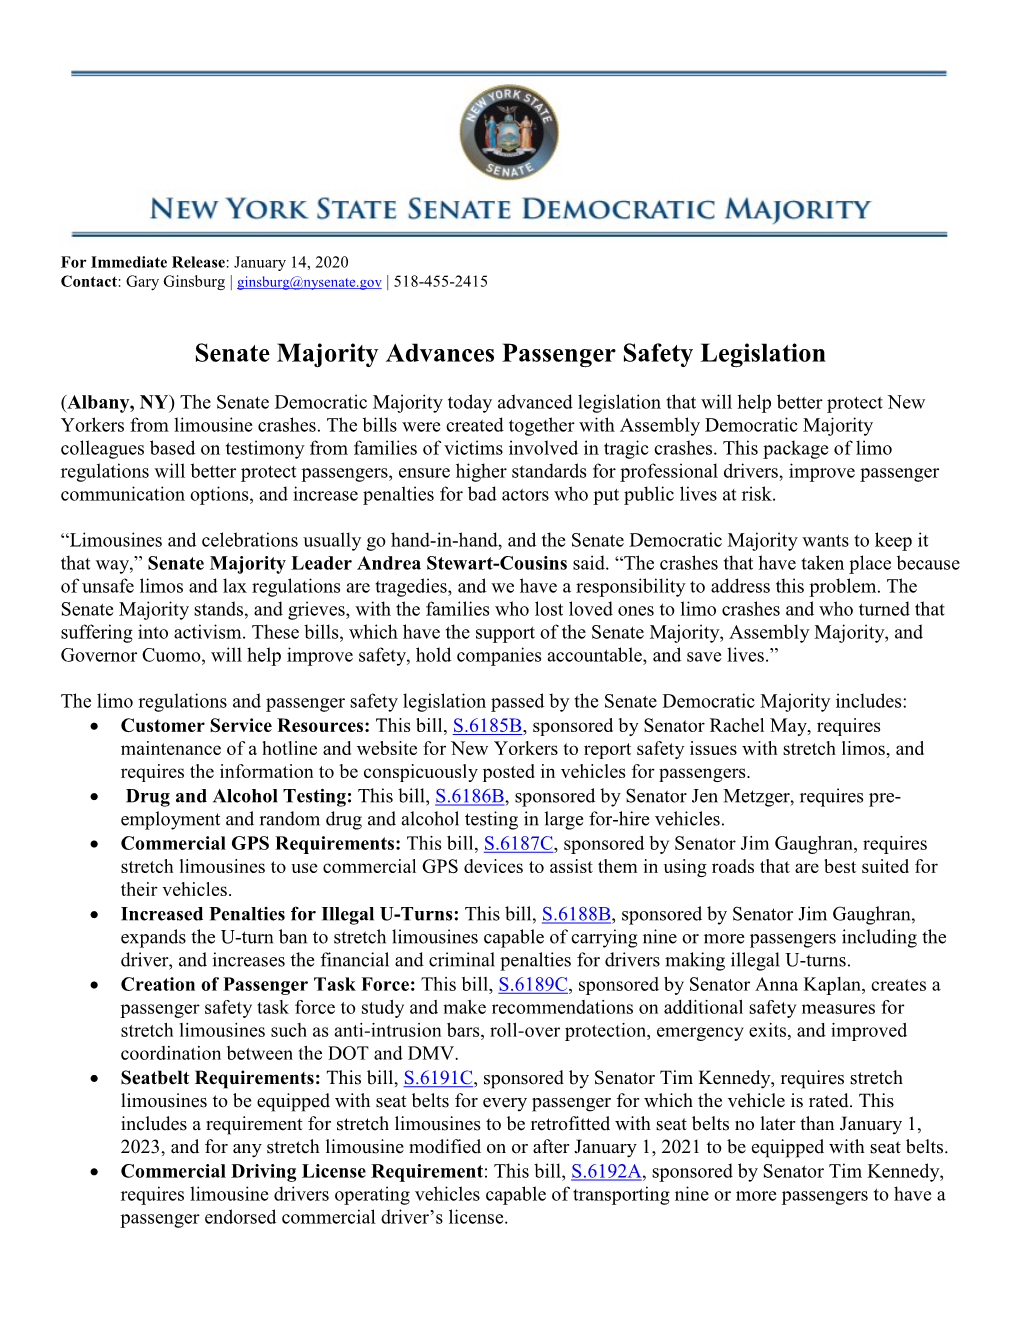 Senate Majority Advances Passenger Safety Legislation